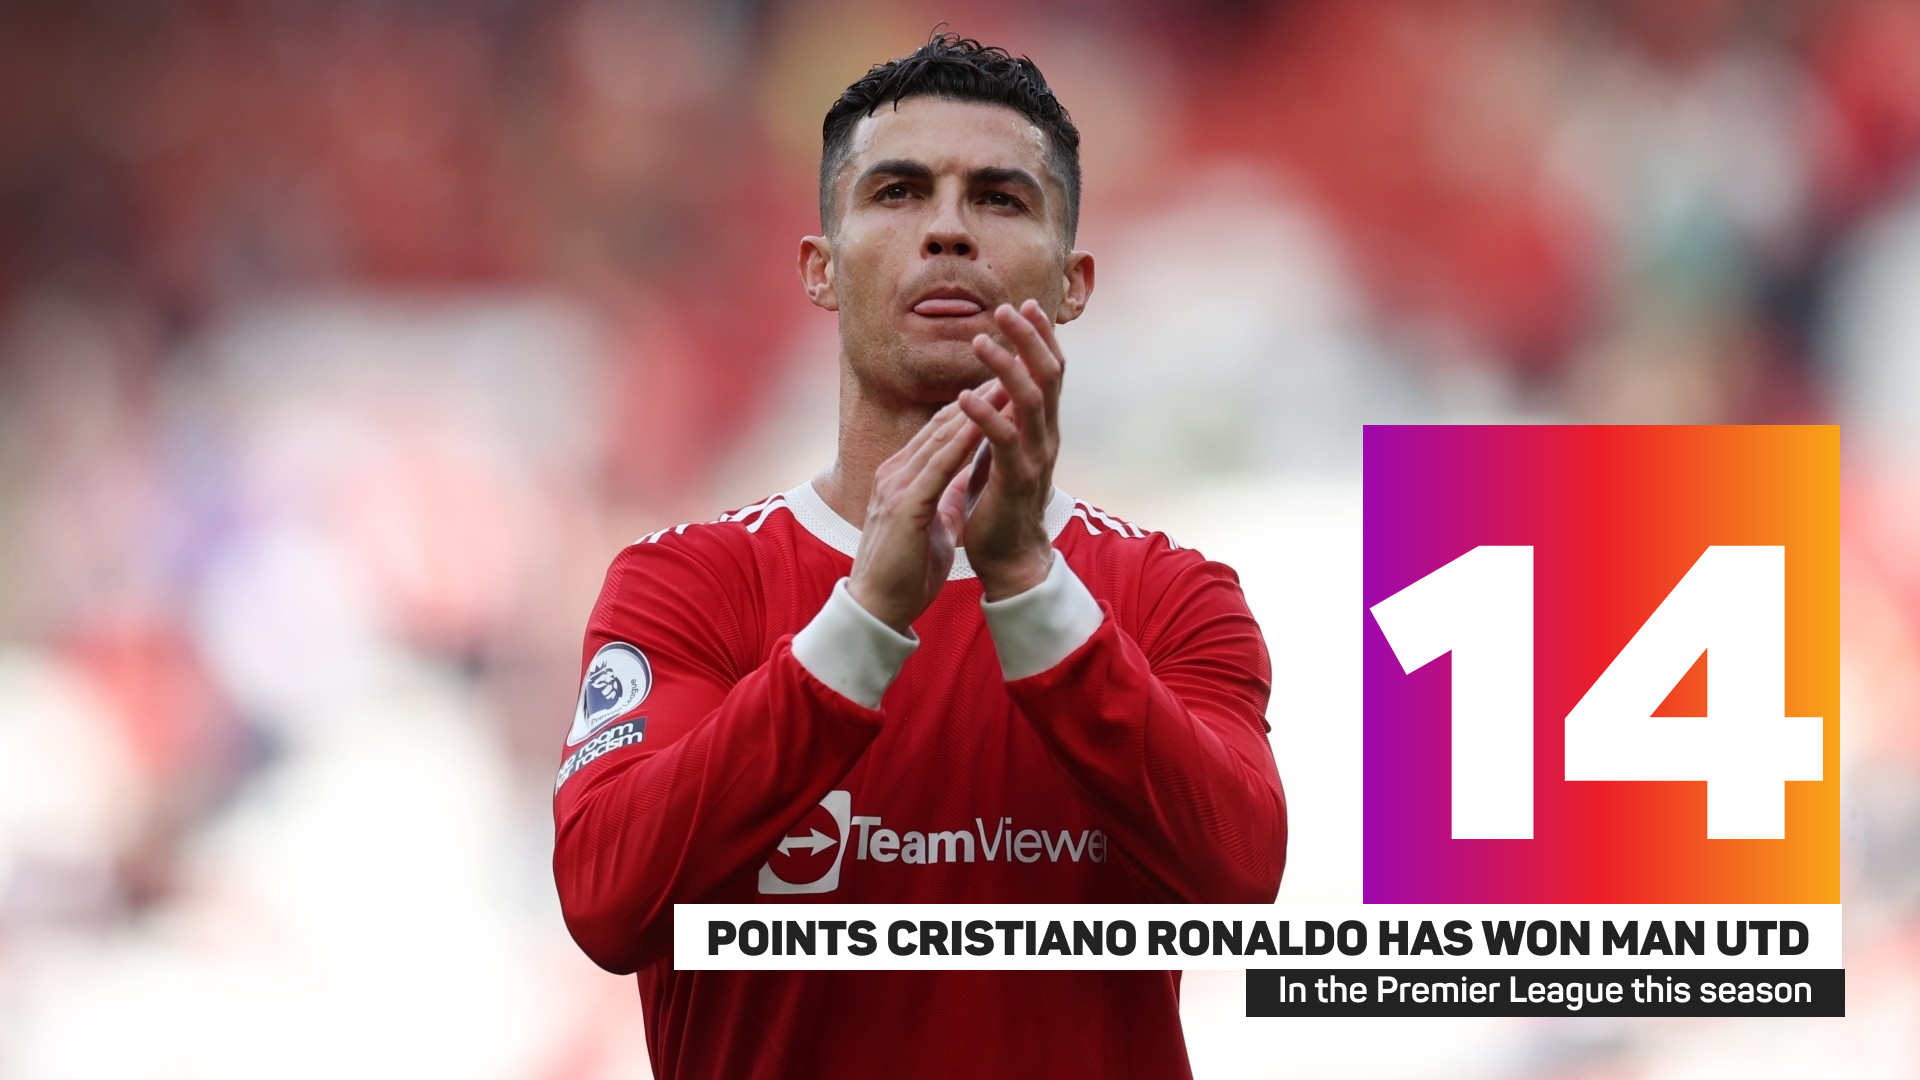 Cristiano Ronaldo has won United 14 Premier League points this season